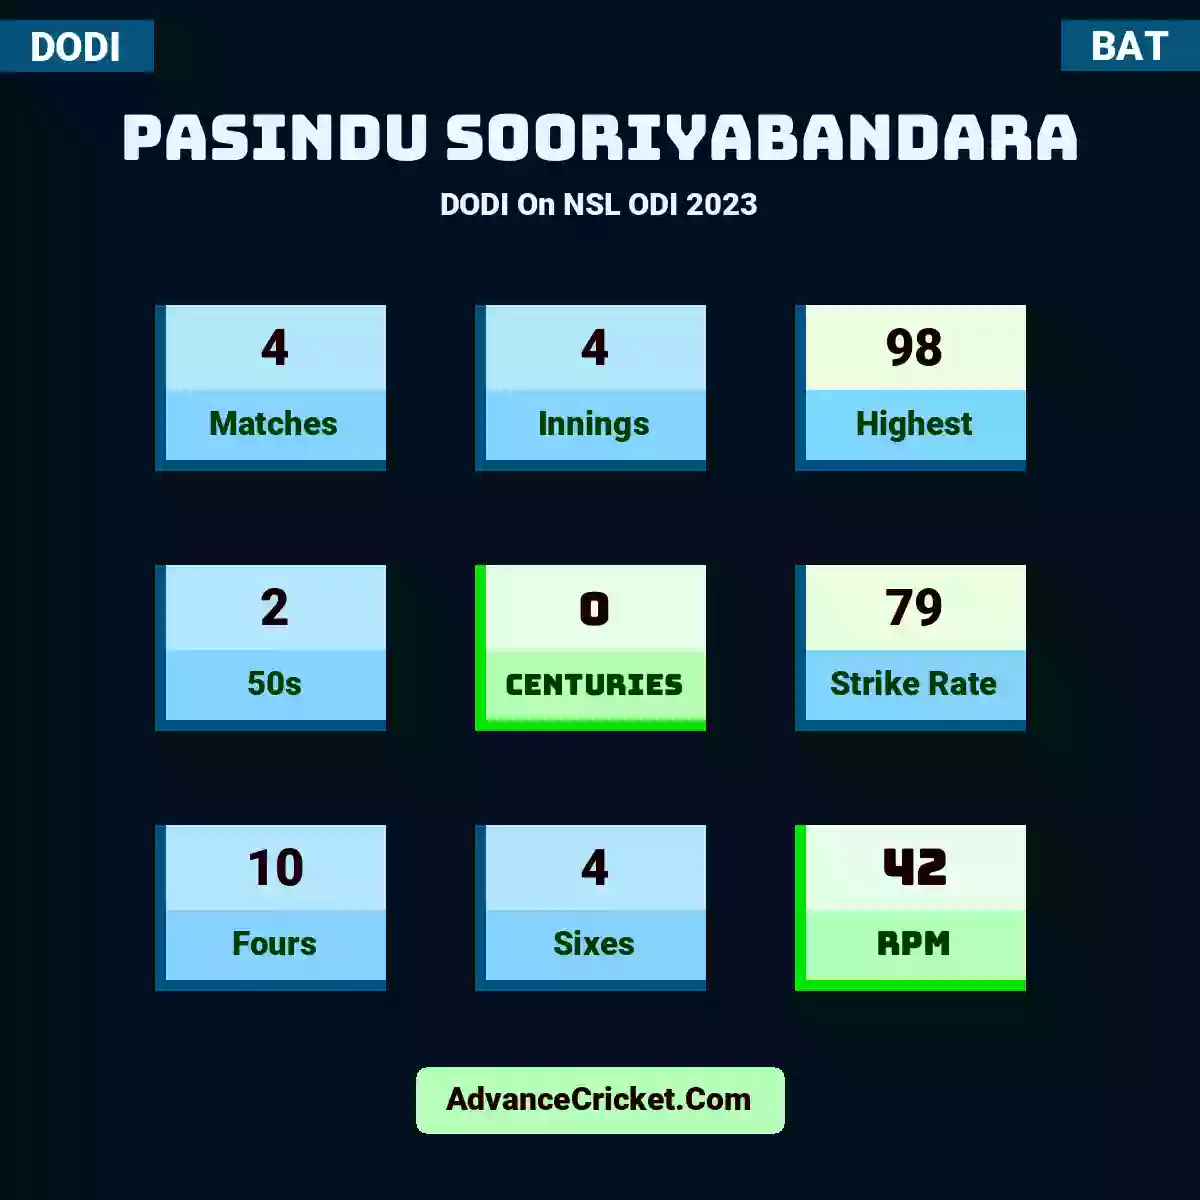 Pasindu Sooriyabandara DODI  On NSL ODI 2023, Pasindu Sooriyabandara played 4 matches, scored 98 runs as highest, 2 half-centuries, and 0 centuries, with a strike rate of 79. P.Sooriyabandara hit 10 fours and 4 sixes, with an RPM of 42.